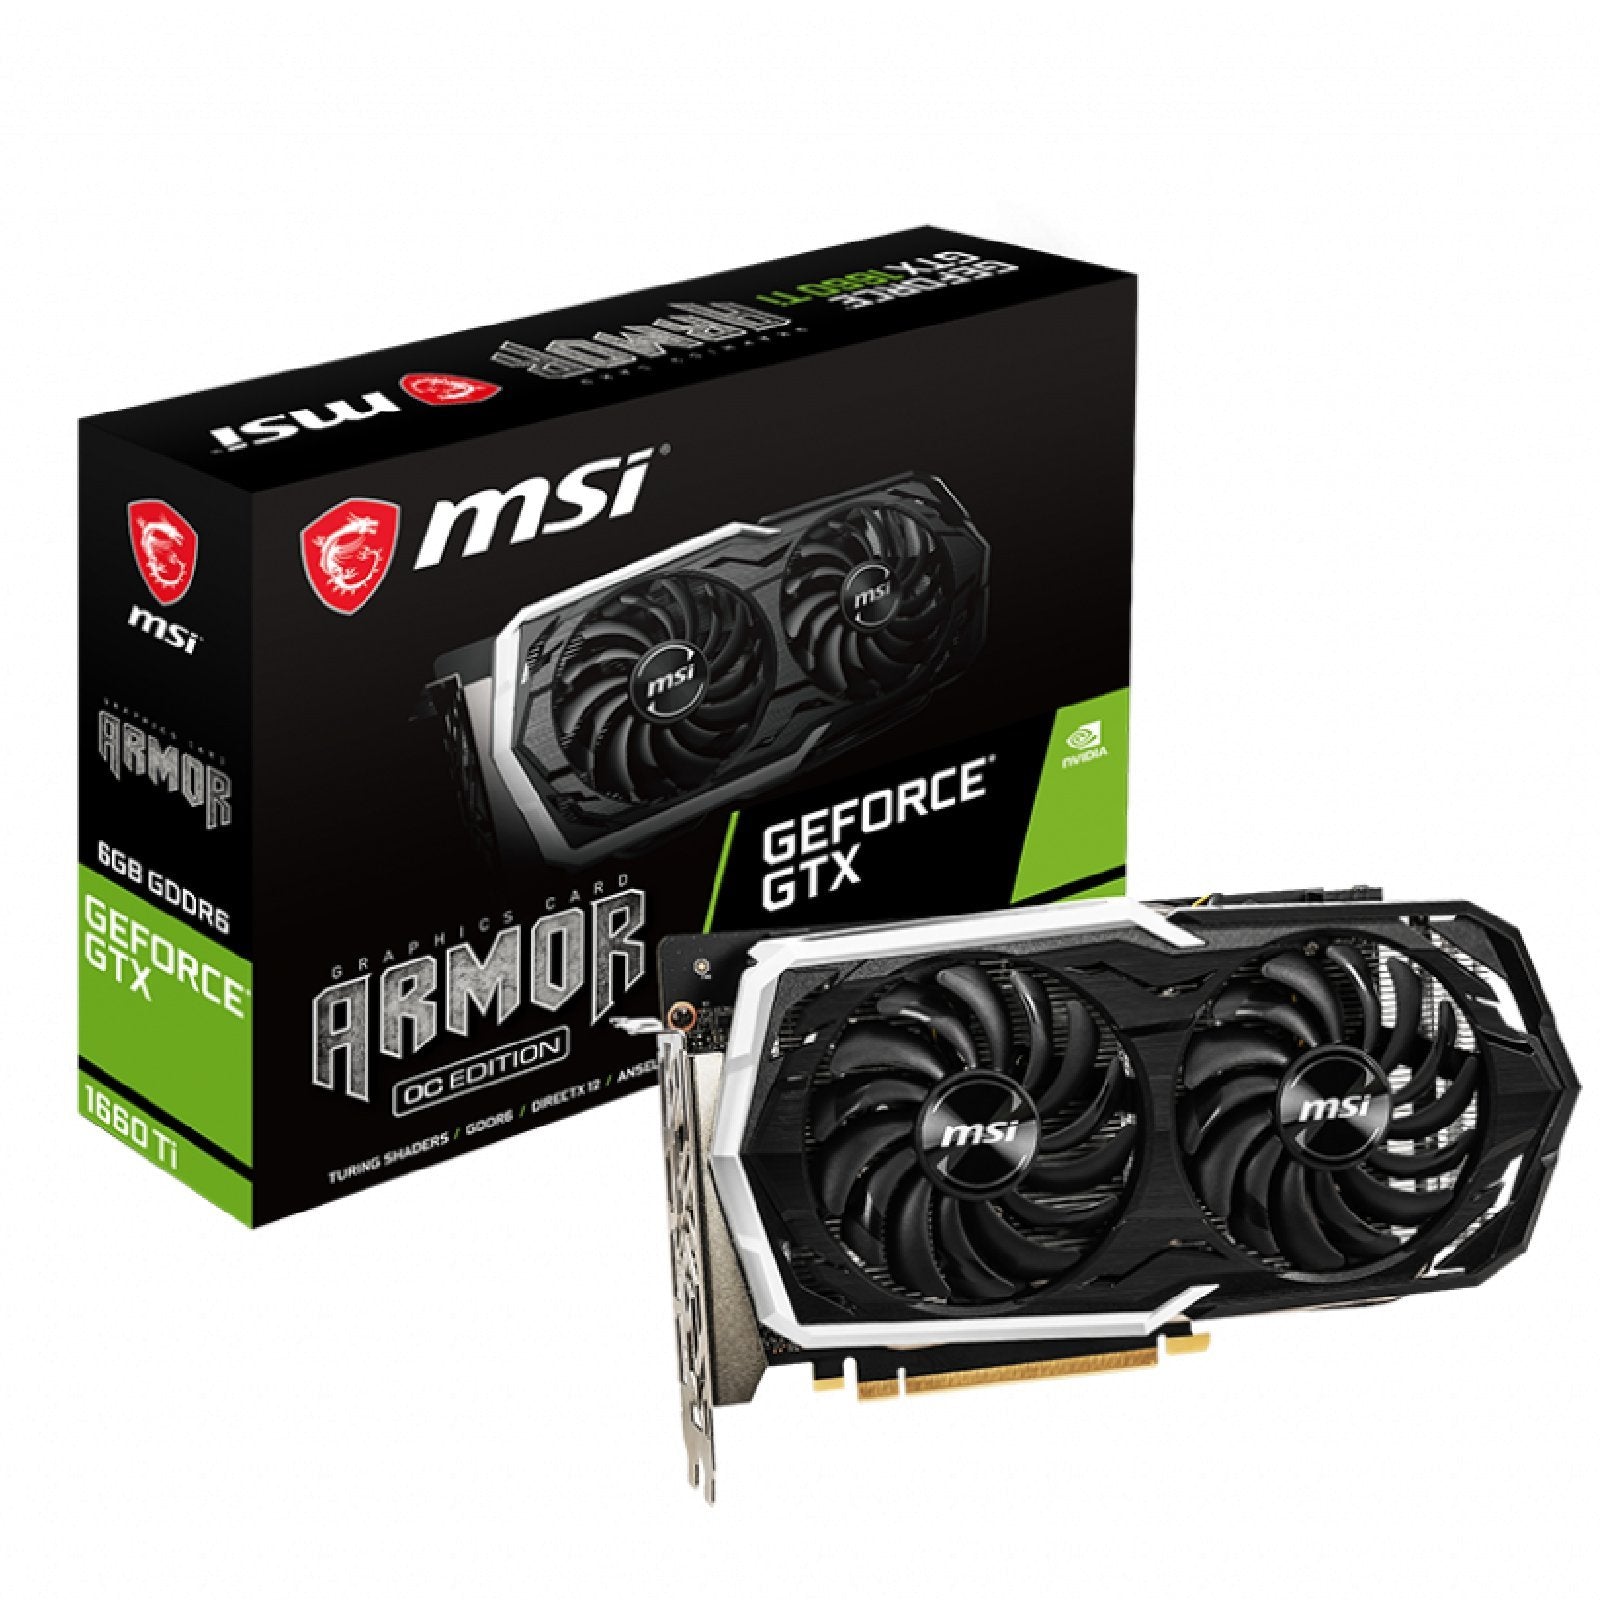 MSI GeForce GTX 1660 Ti Armor 6G OC Edition GPU - Store 974 | ستور ٩٧٤